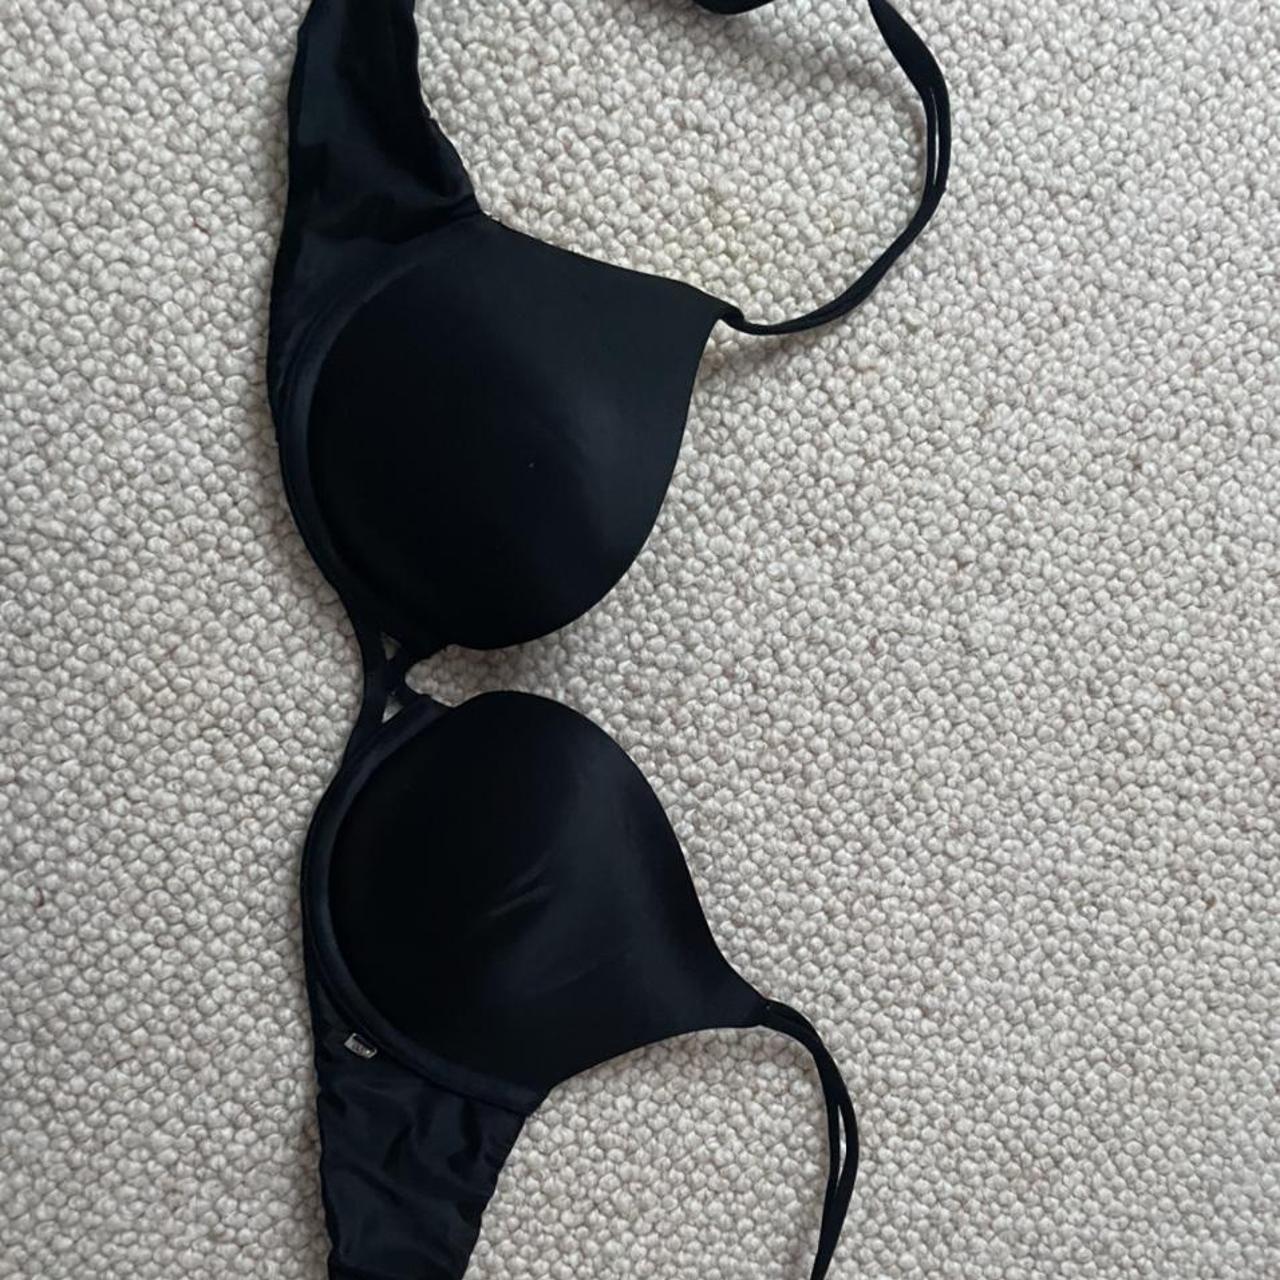 Victoria secret “ very sexy” black bra., 32B- worn